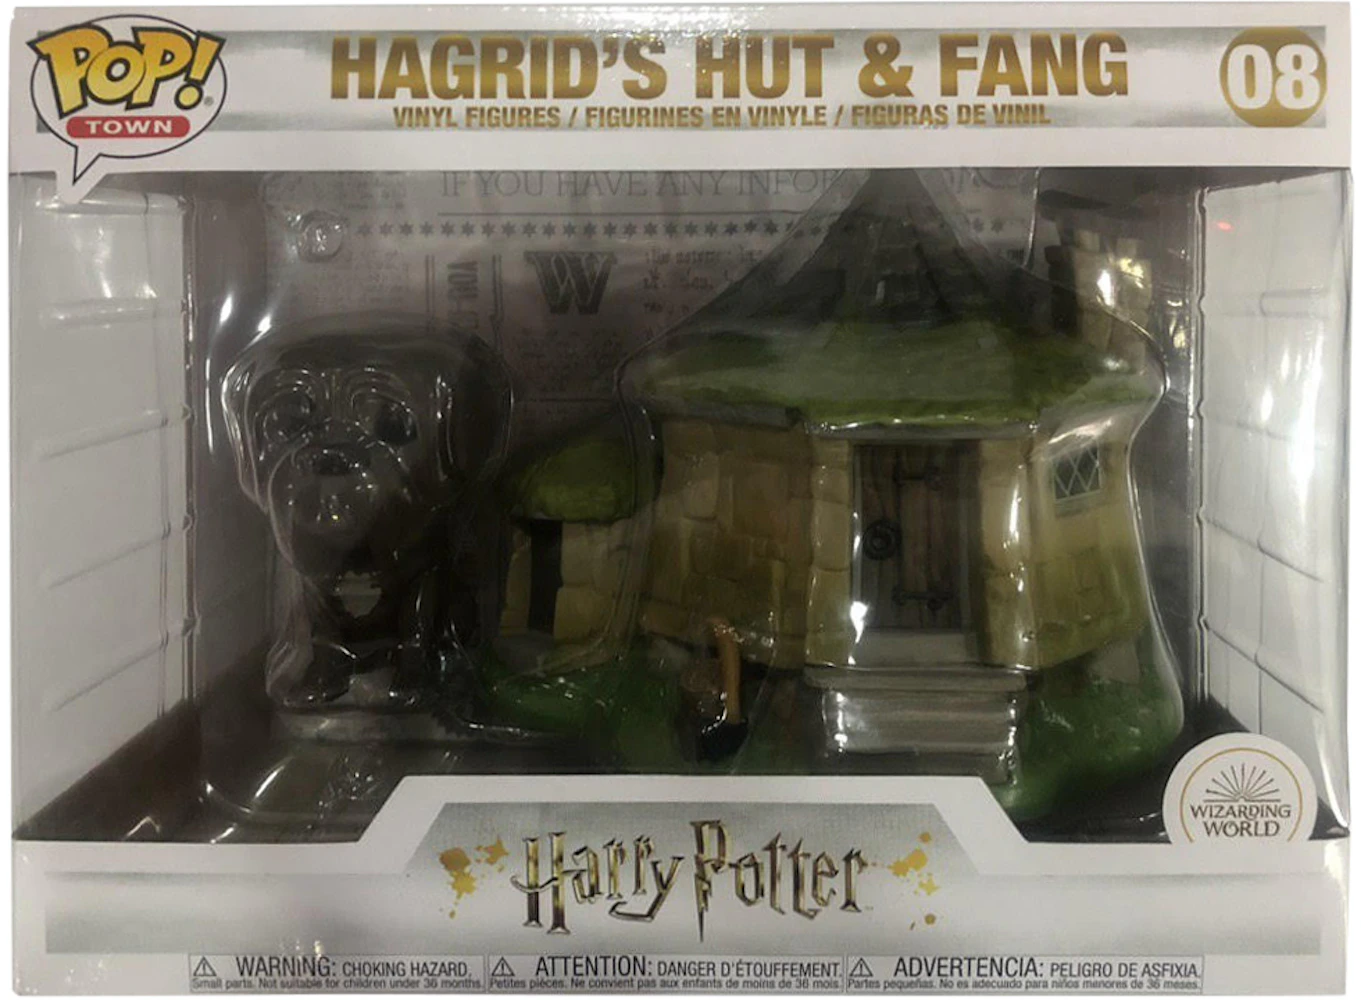 Funko Pop! Harry Potter (Quidditch) Figure #08 - JP